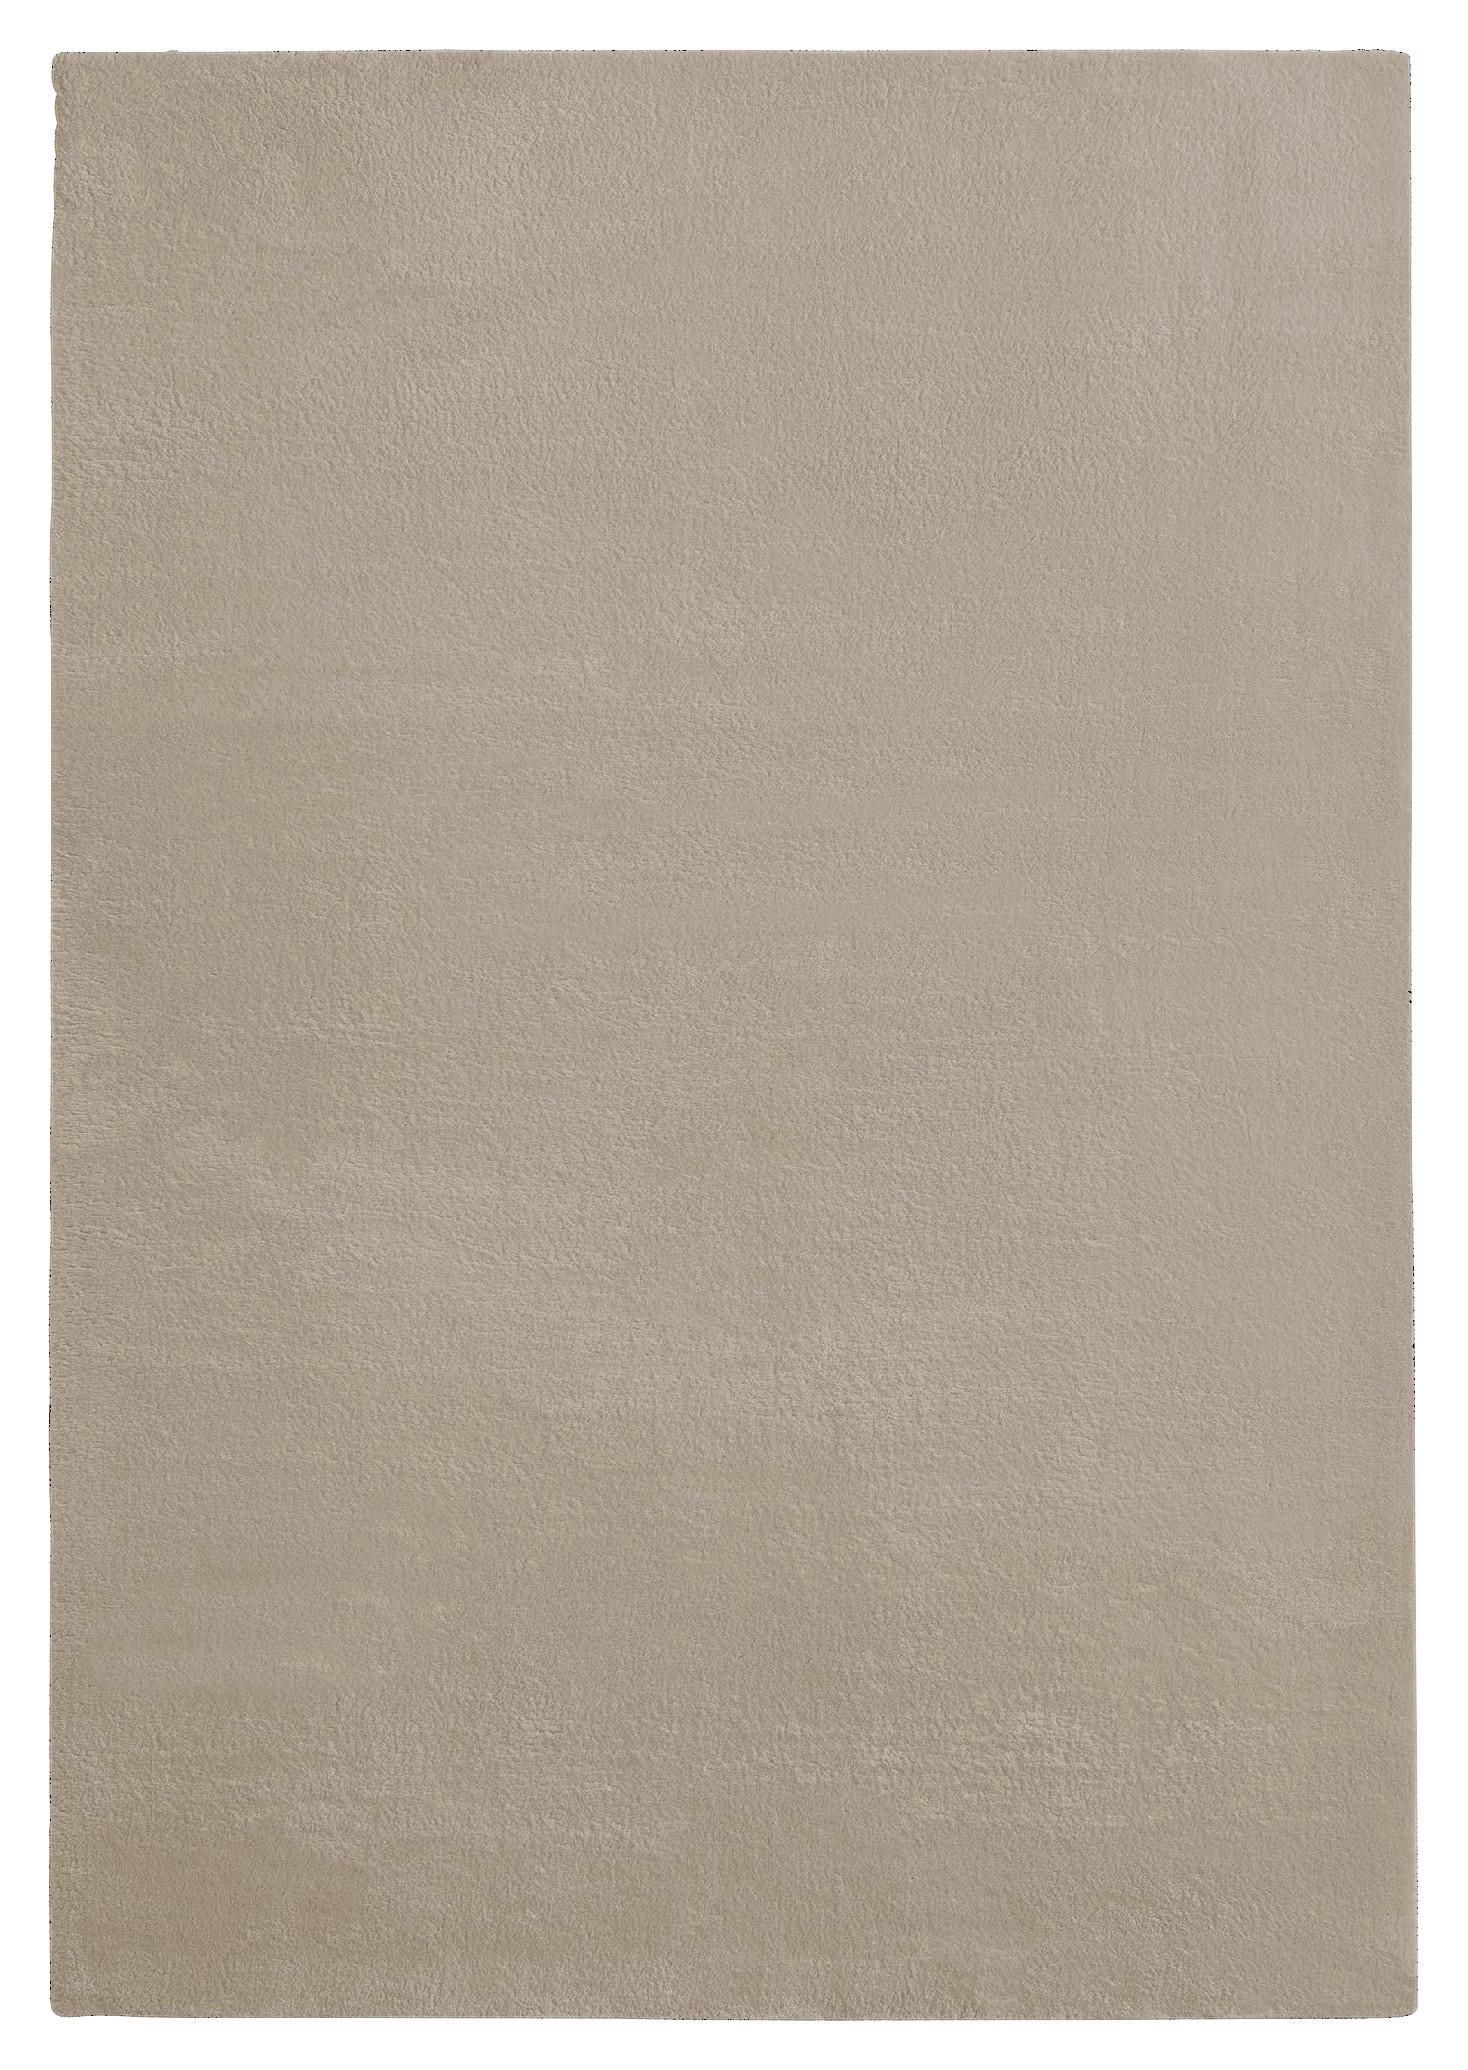 Fellteppich Melisander 100x150 cm - Sandfarben, Basics, Textil (100/150cm) - Luca Bessoni